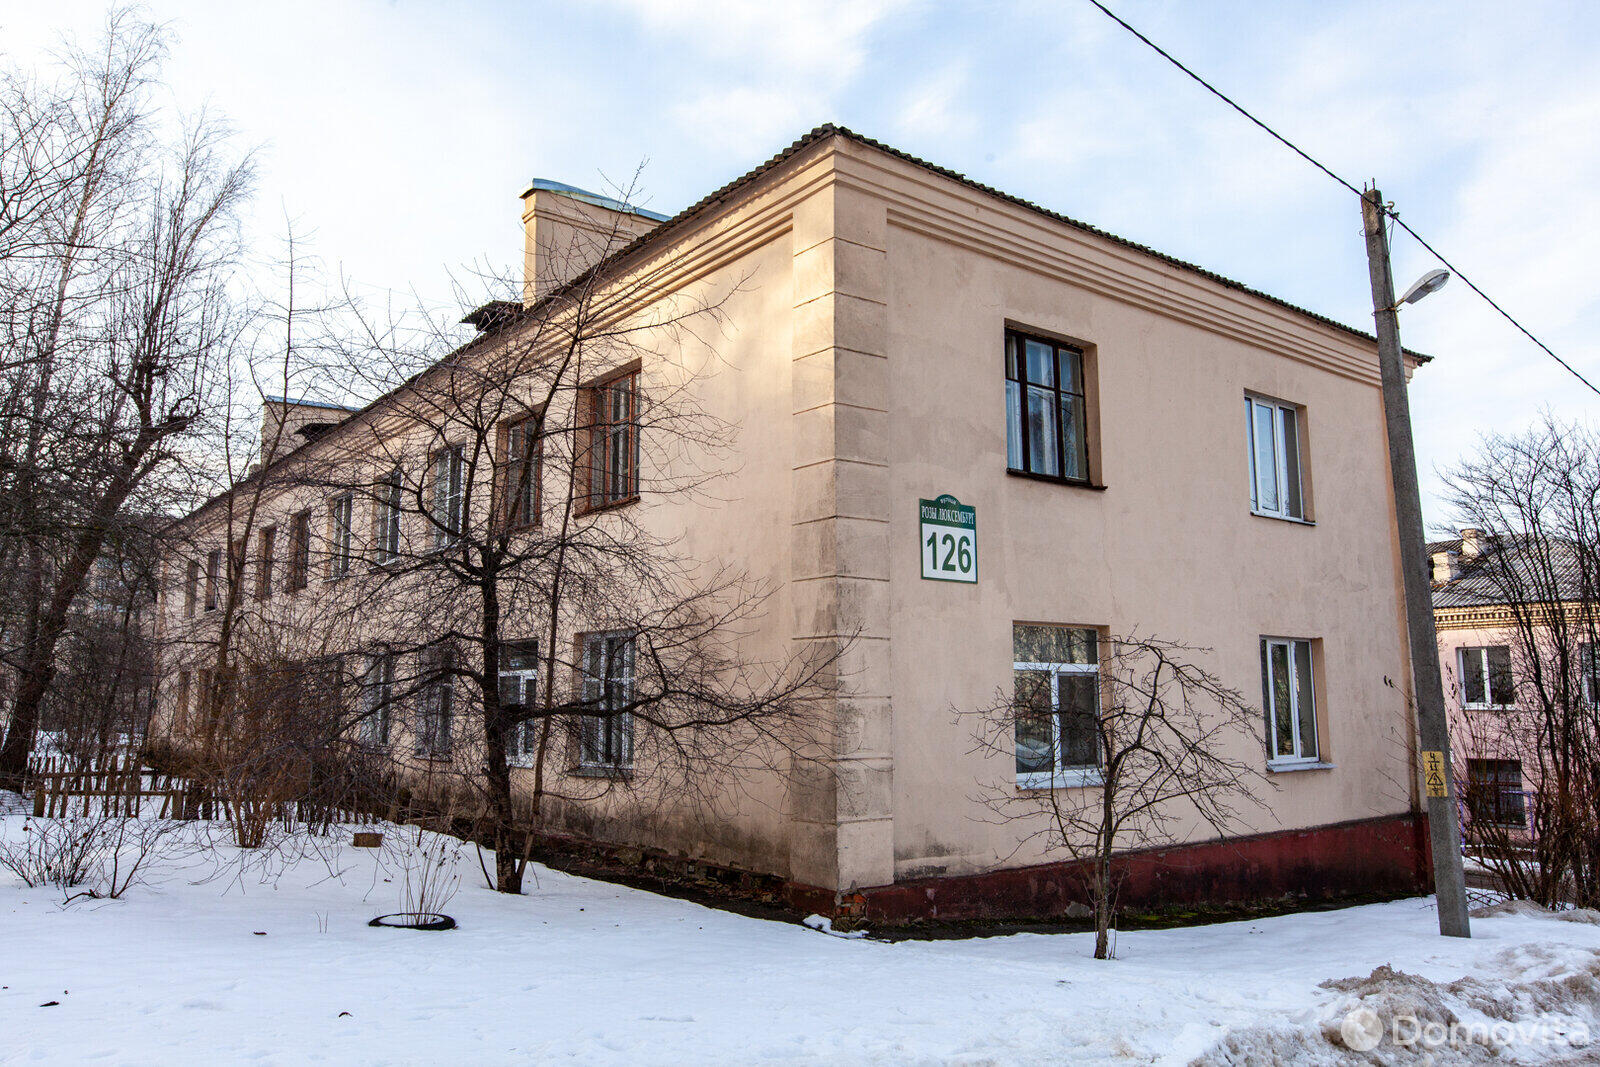 квартира, Минск, ул. Розы Люксембург, д. 126, стоимость продажи 155 440 р.